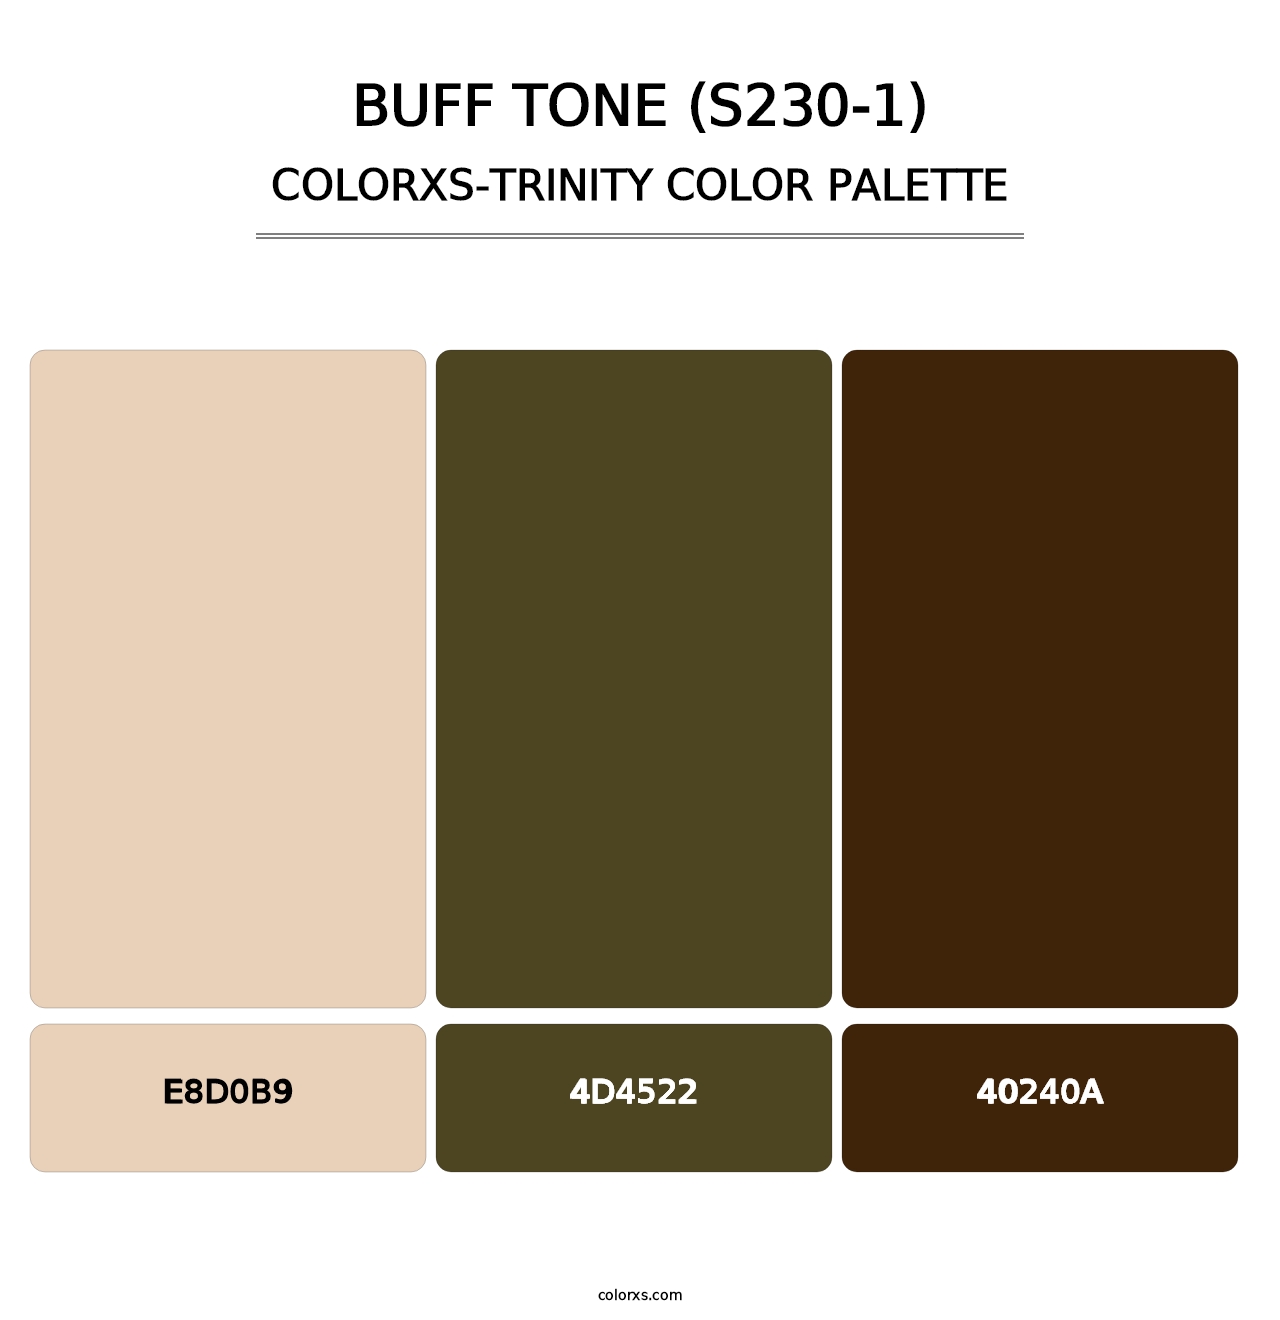 Buff Tone (S230-1) - Colorxs Trinity Palette